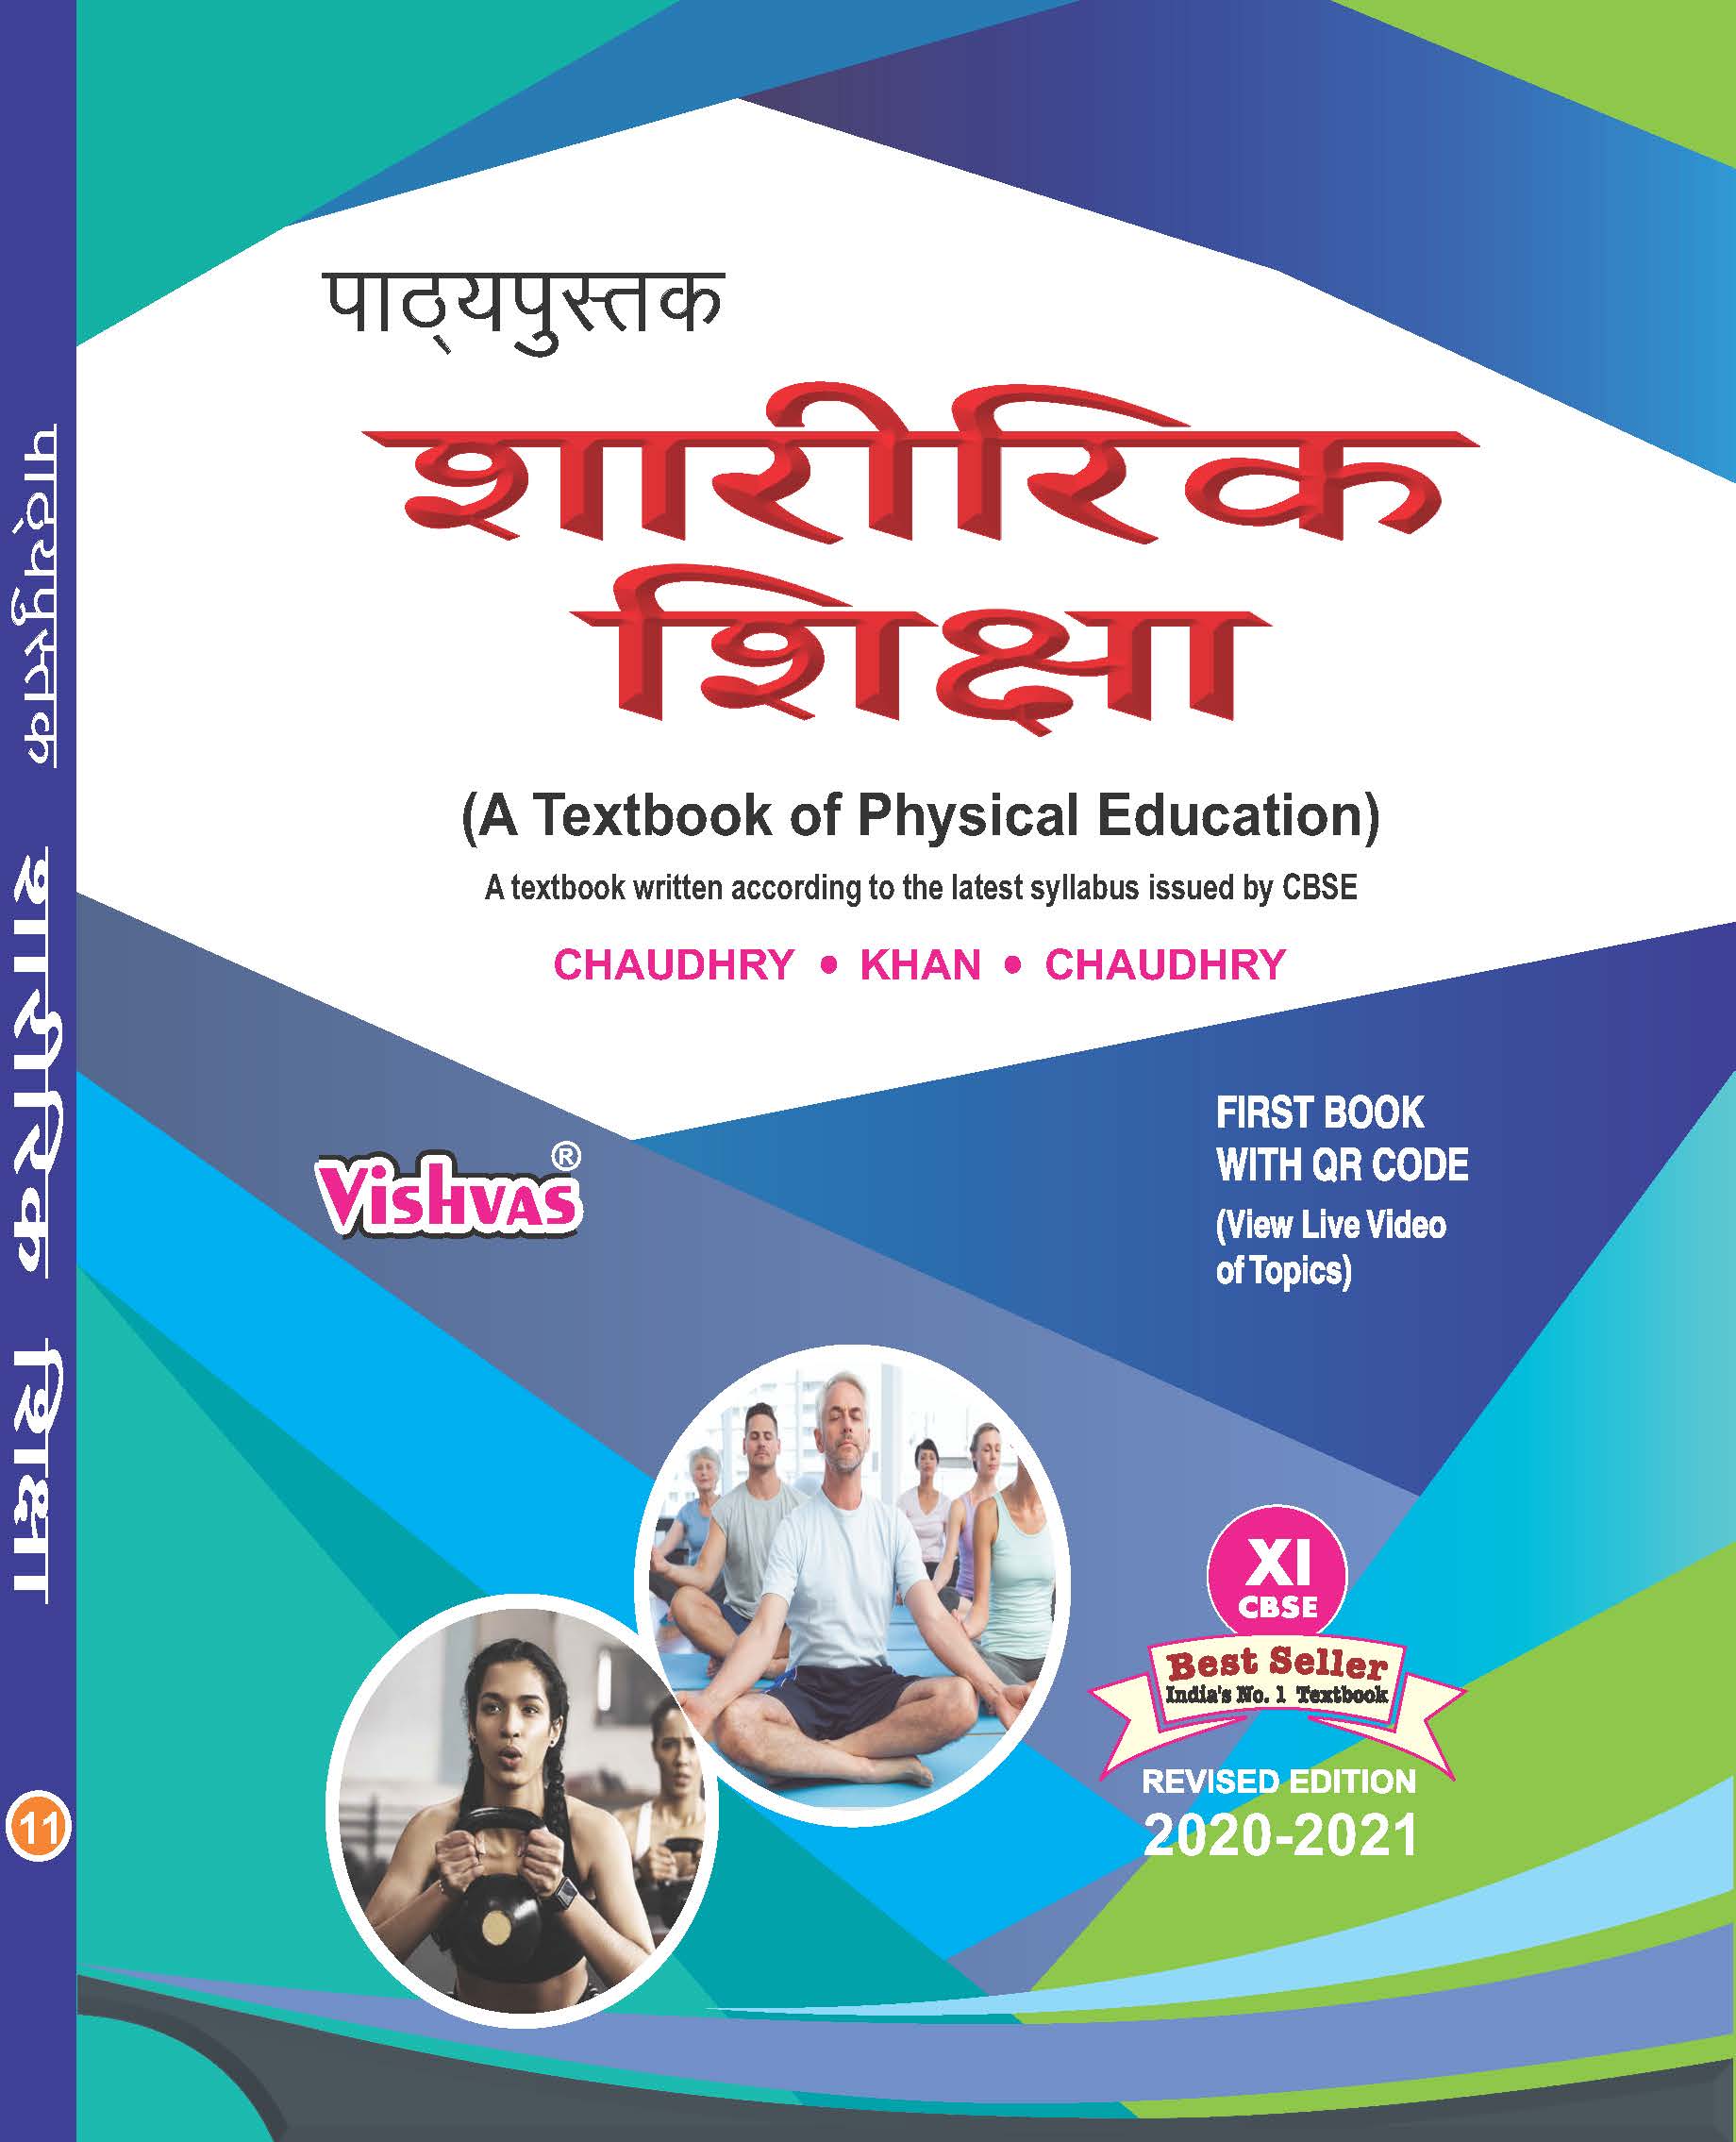 research paper on yoga pdf in hindi